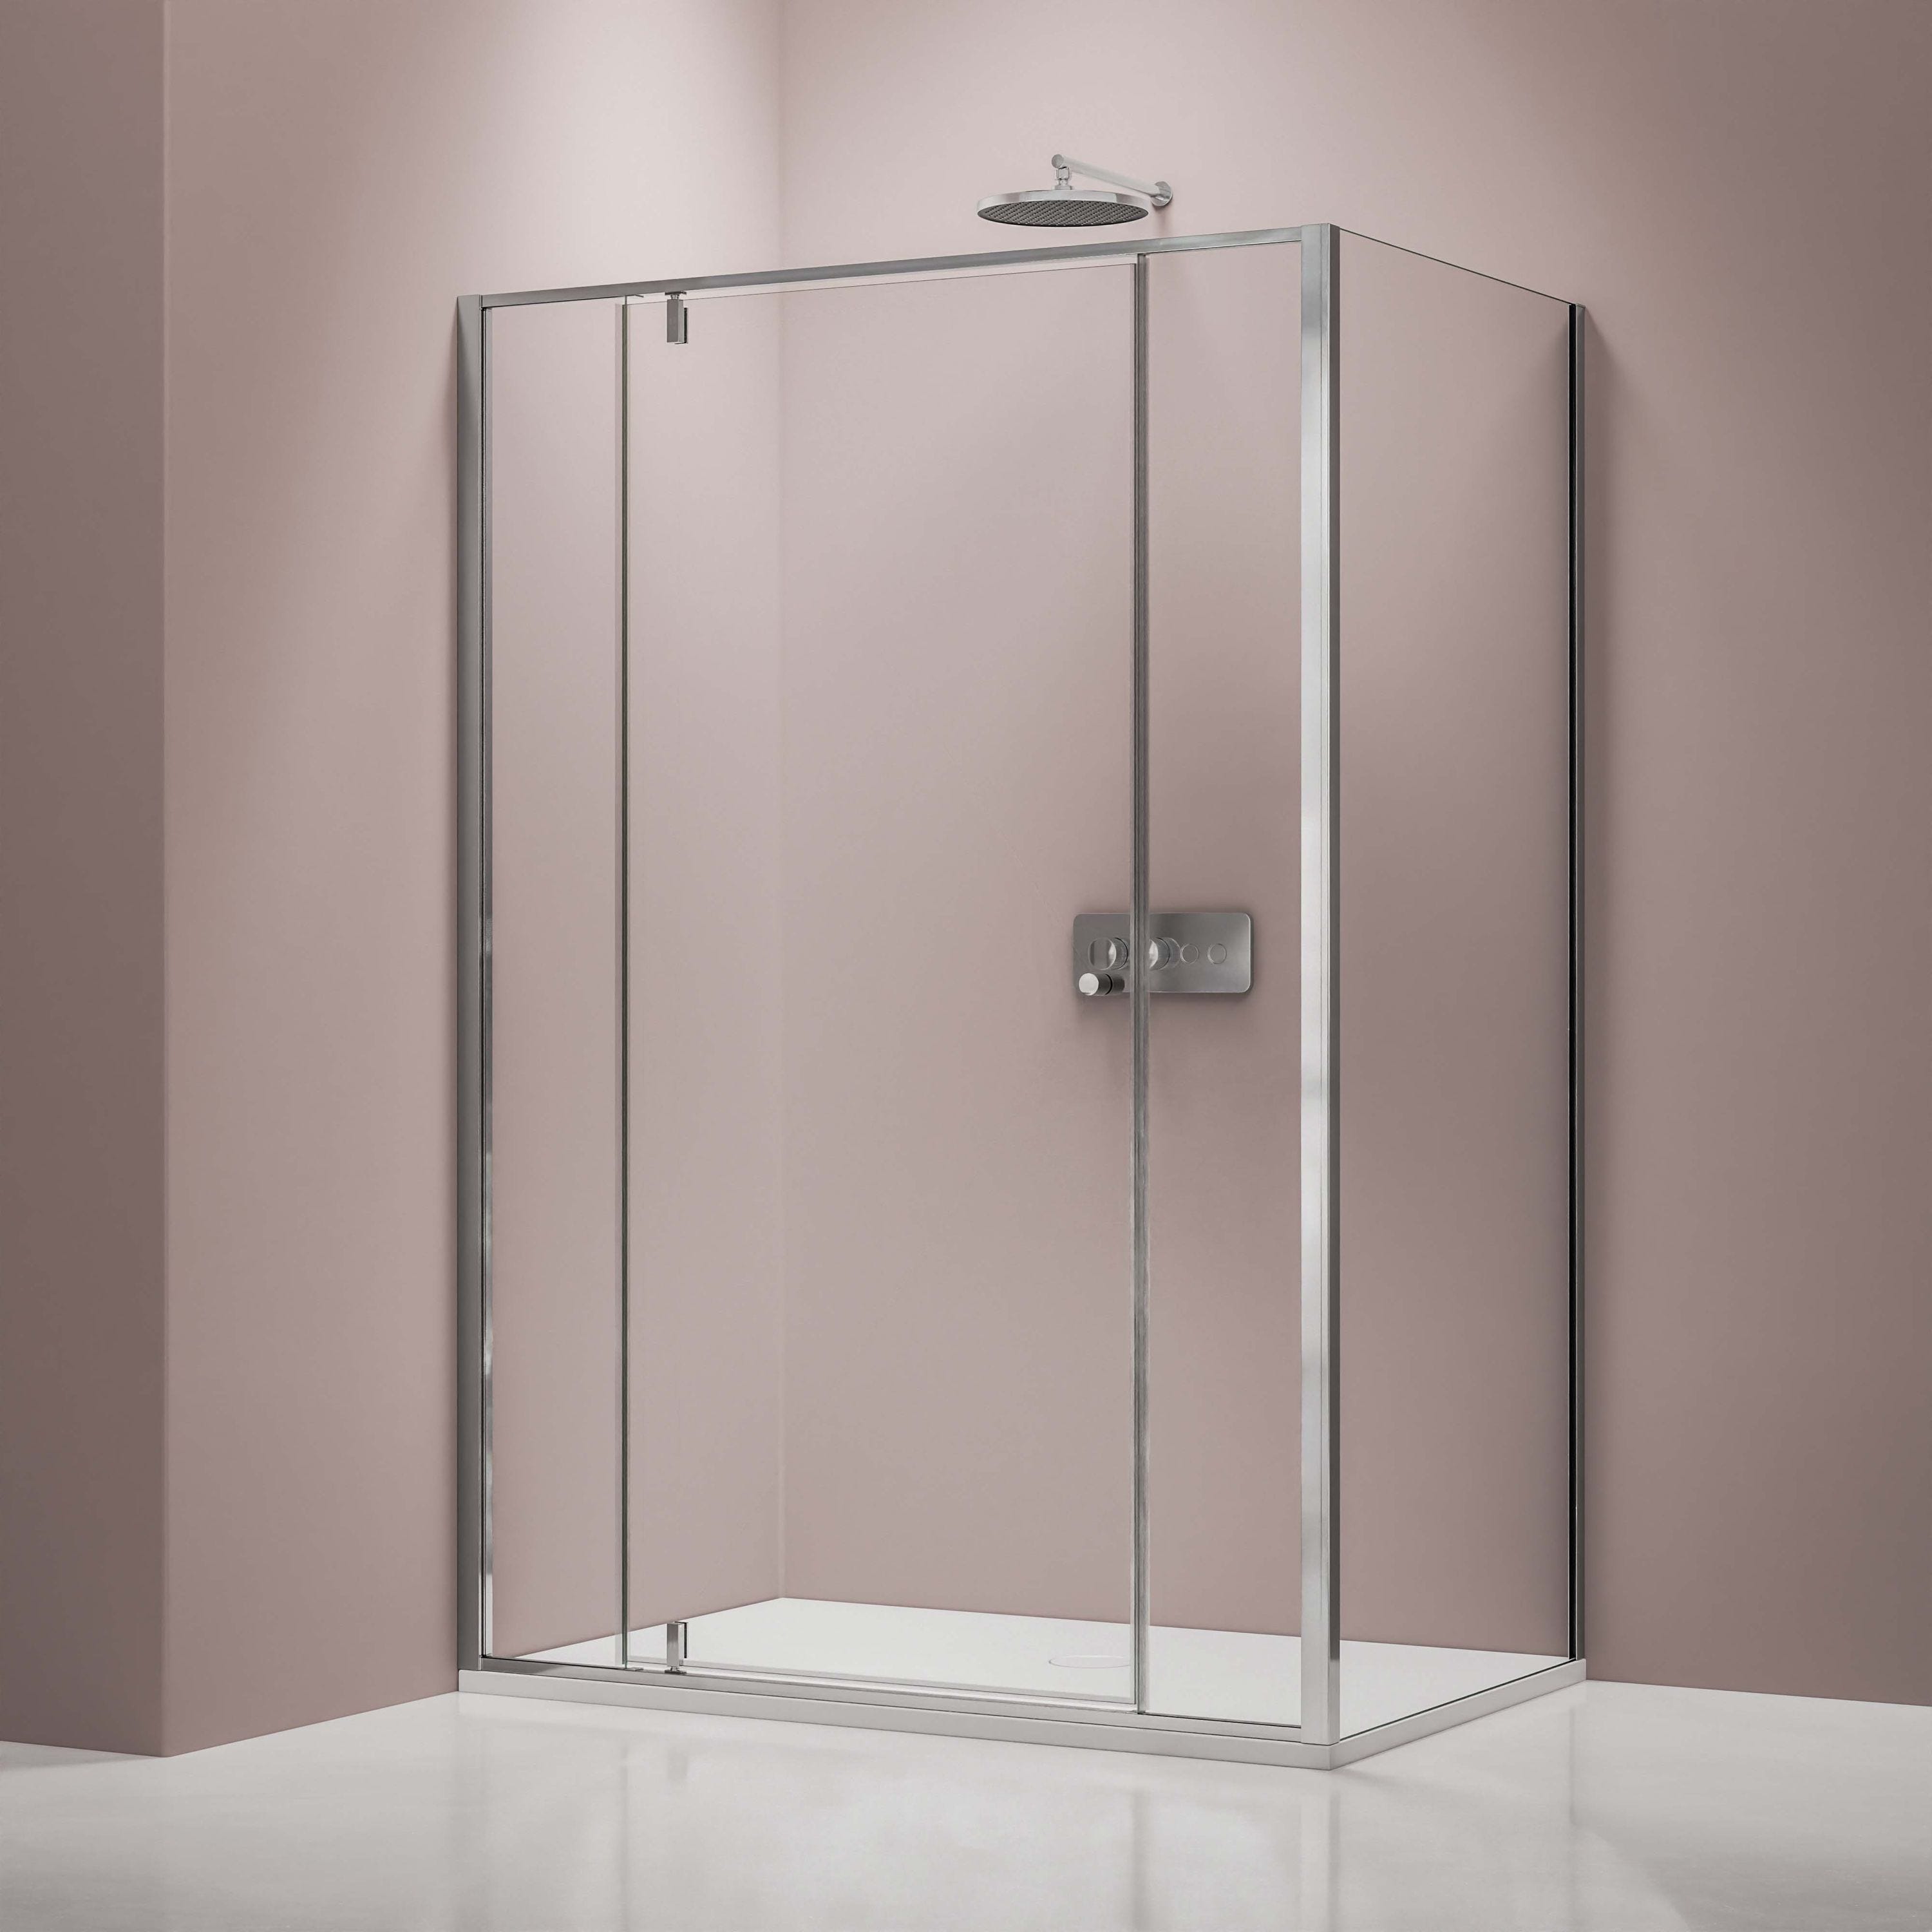 AICA porte de douche pivotante 110x187cm porte de douche avec 1